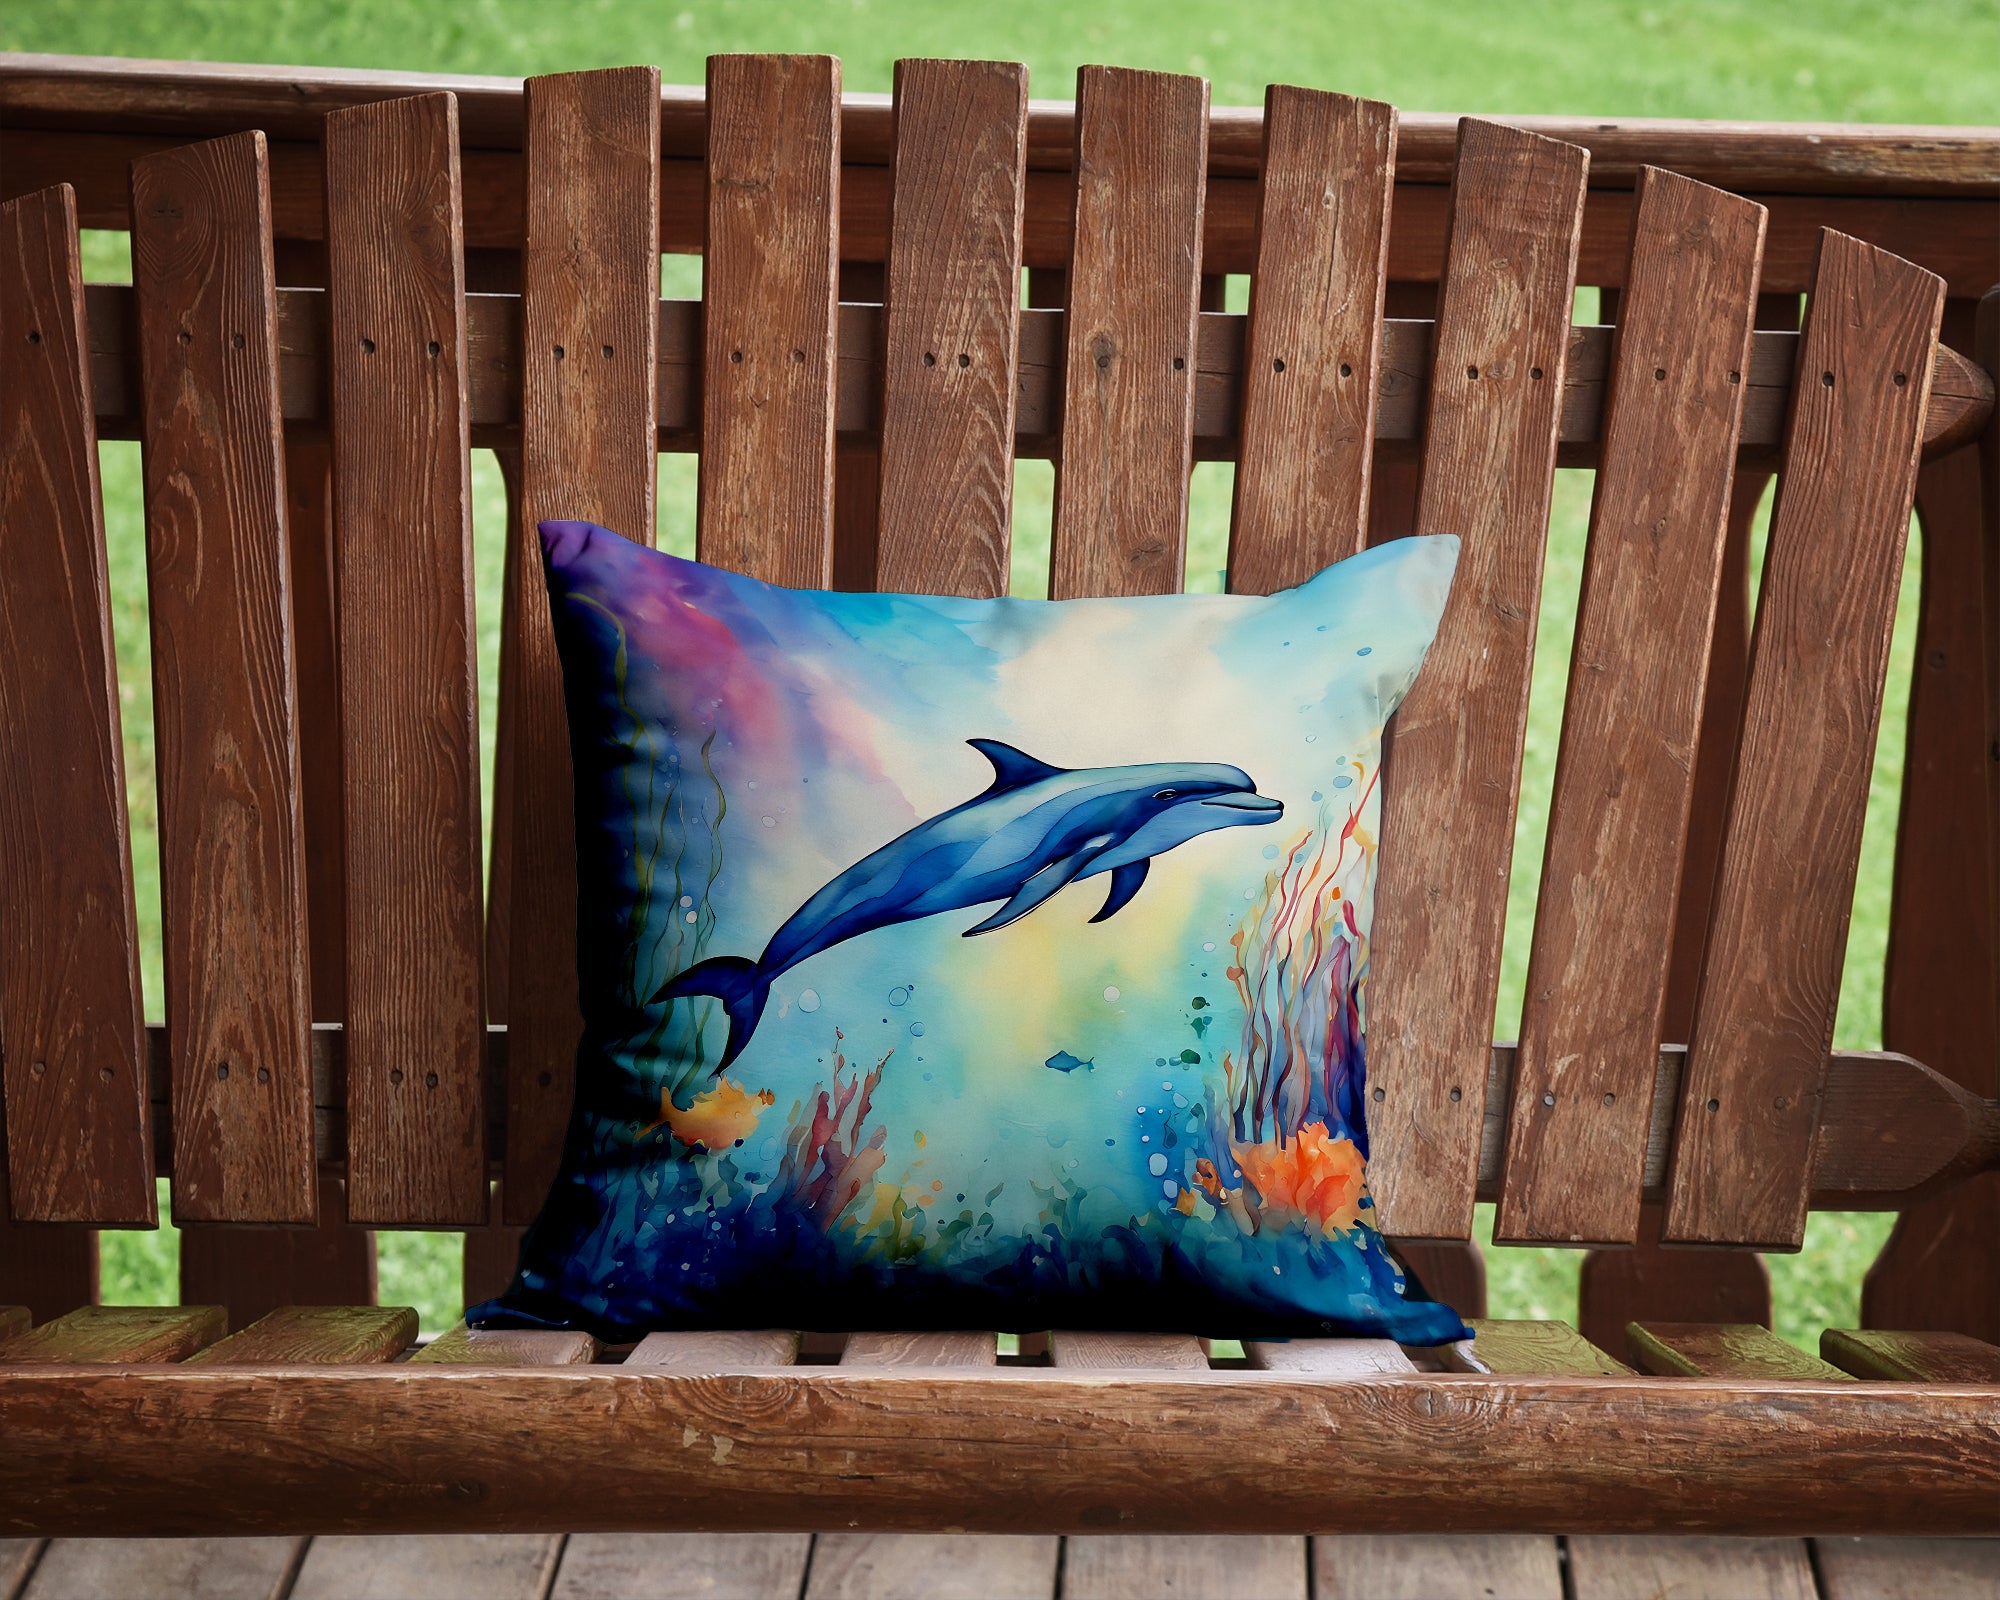 Dolphin Throw Pillow